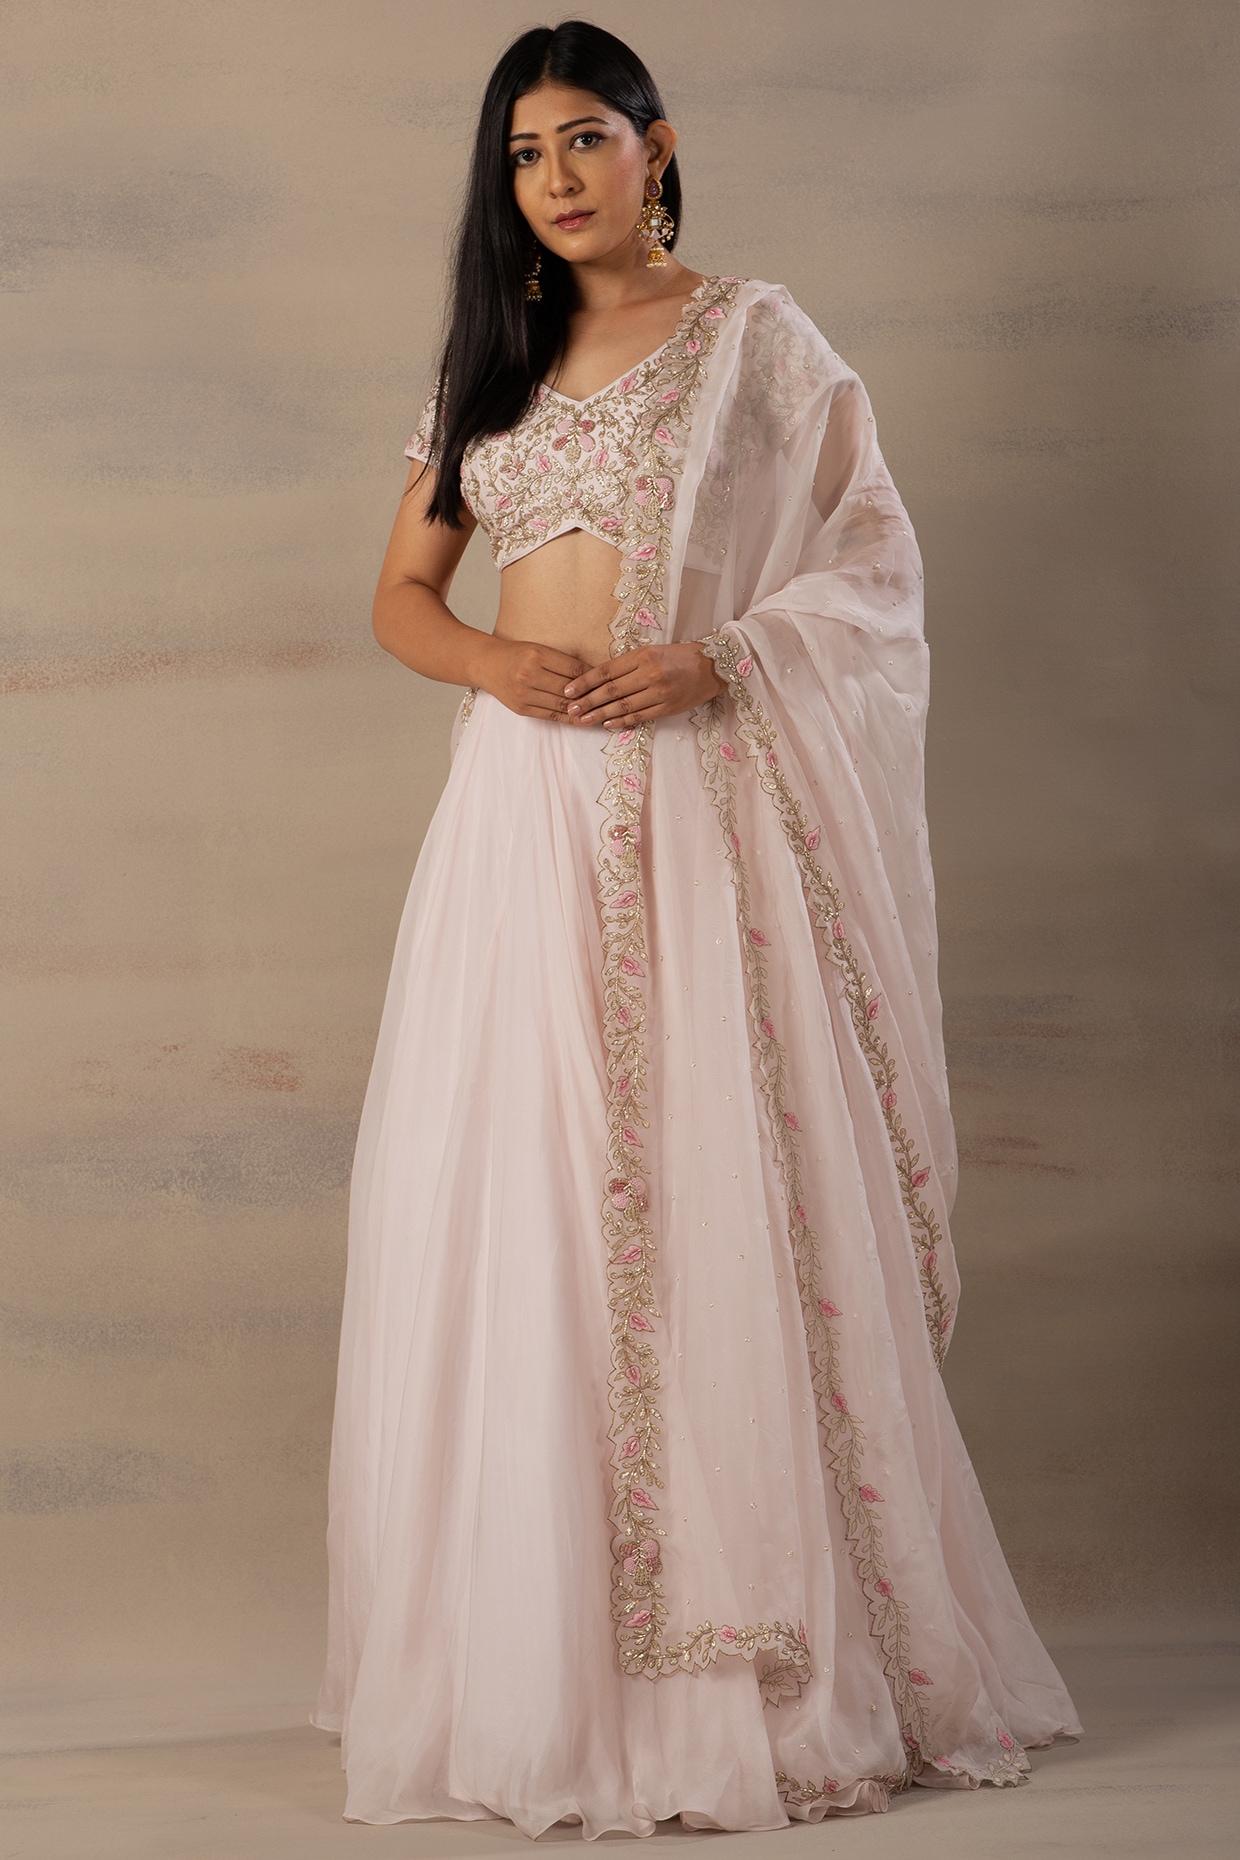 Beige Art Silk Floral Wedding Lehenga Choli With Pink Dupatta, लहंगा साड़ी  - Shivam E-Commerce, Surat | ID: 26393217097